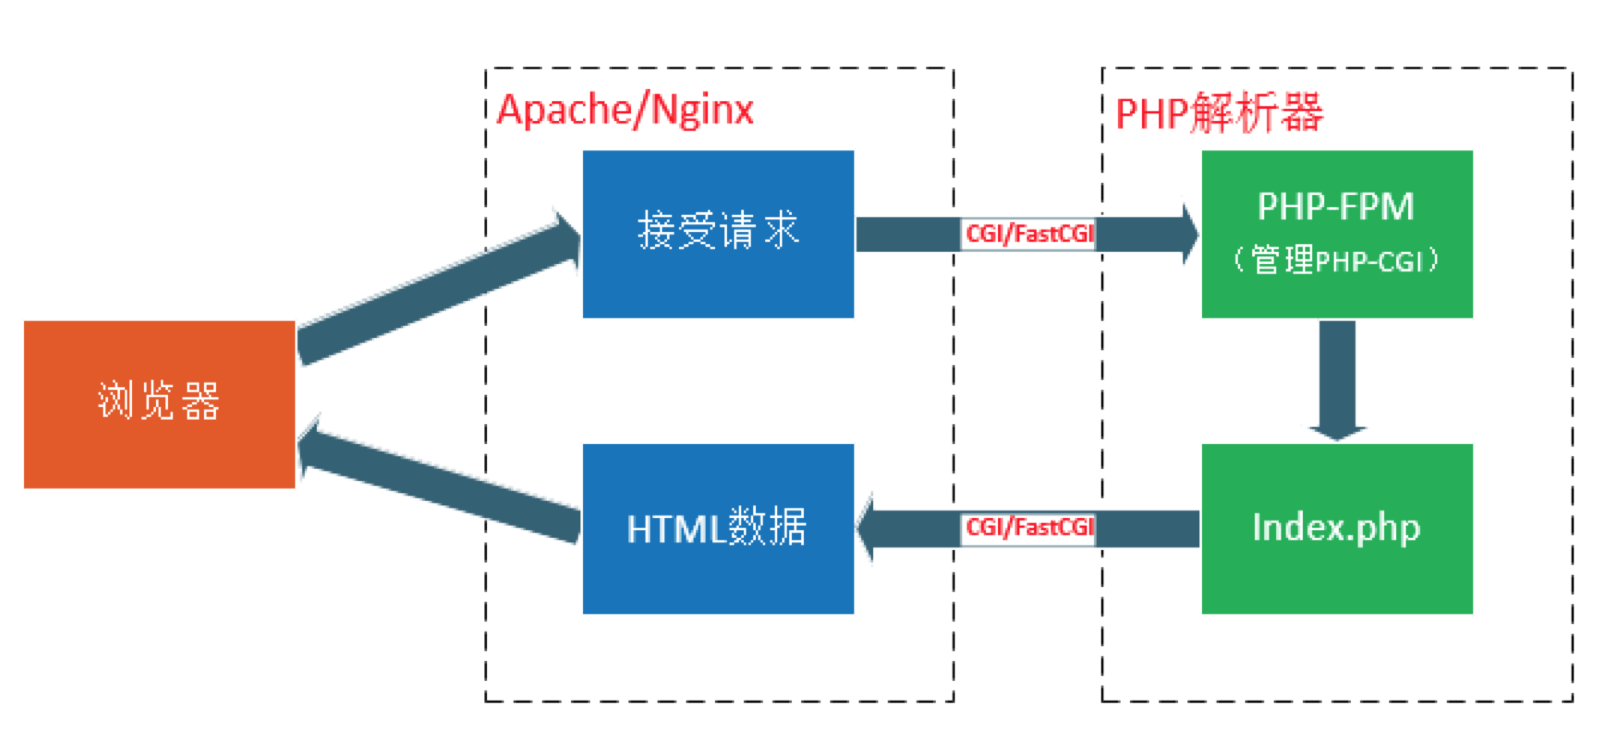 Cgi скрипты. Схема nginx php-FPM. Структура php. Php-FPM nginx. Схема работы php.